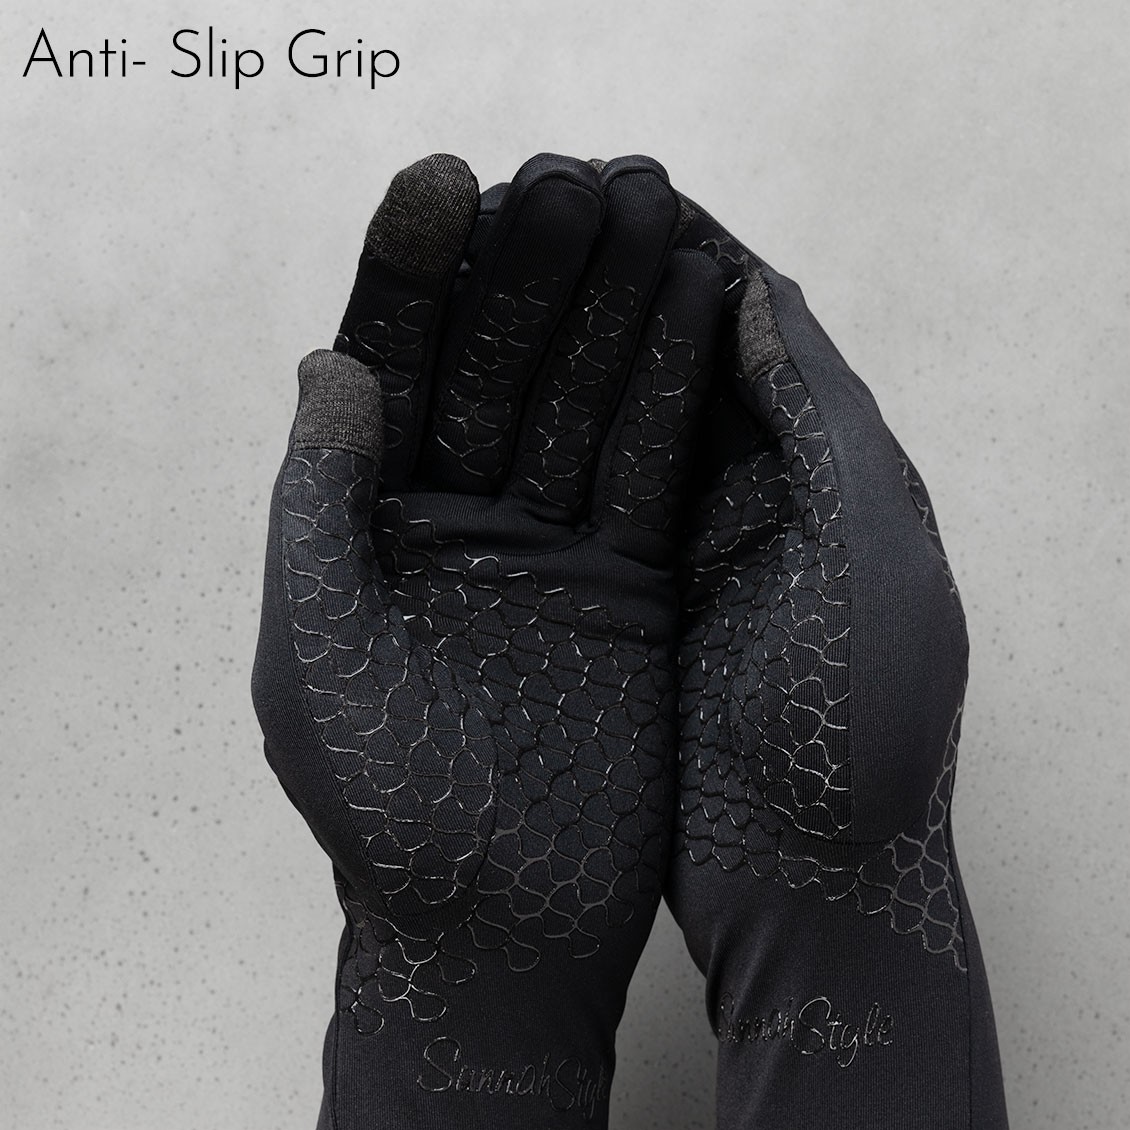 Sunnah Style Esteem Signature Gloves v2 Forearm Length Anti Slip Grip